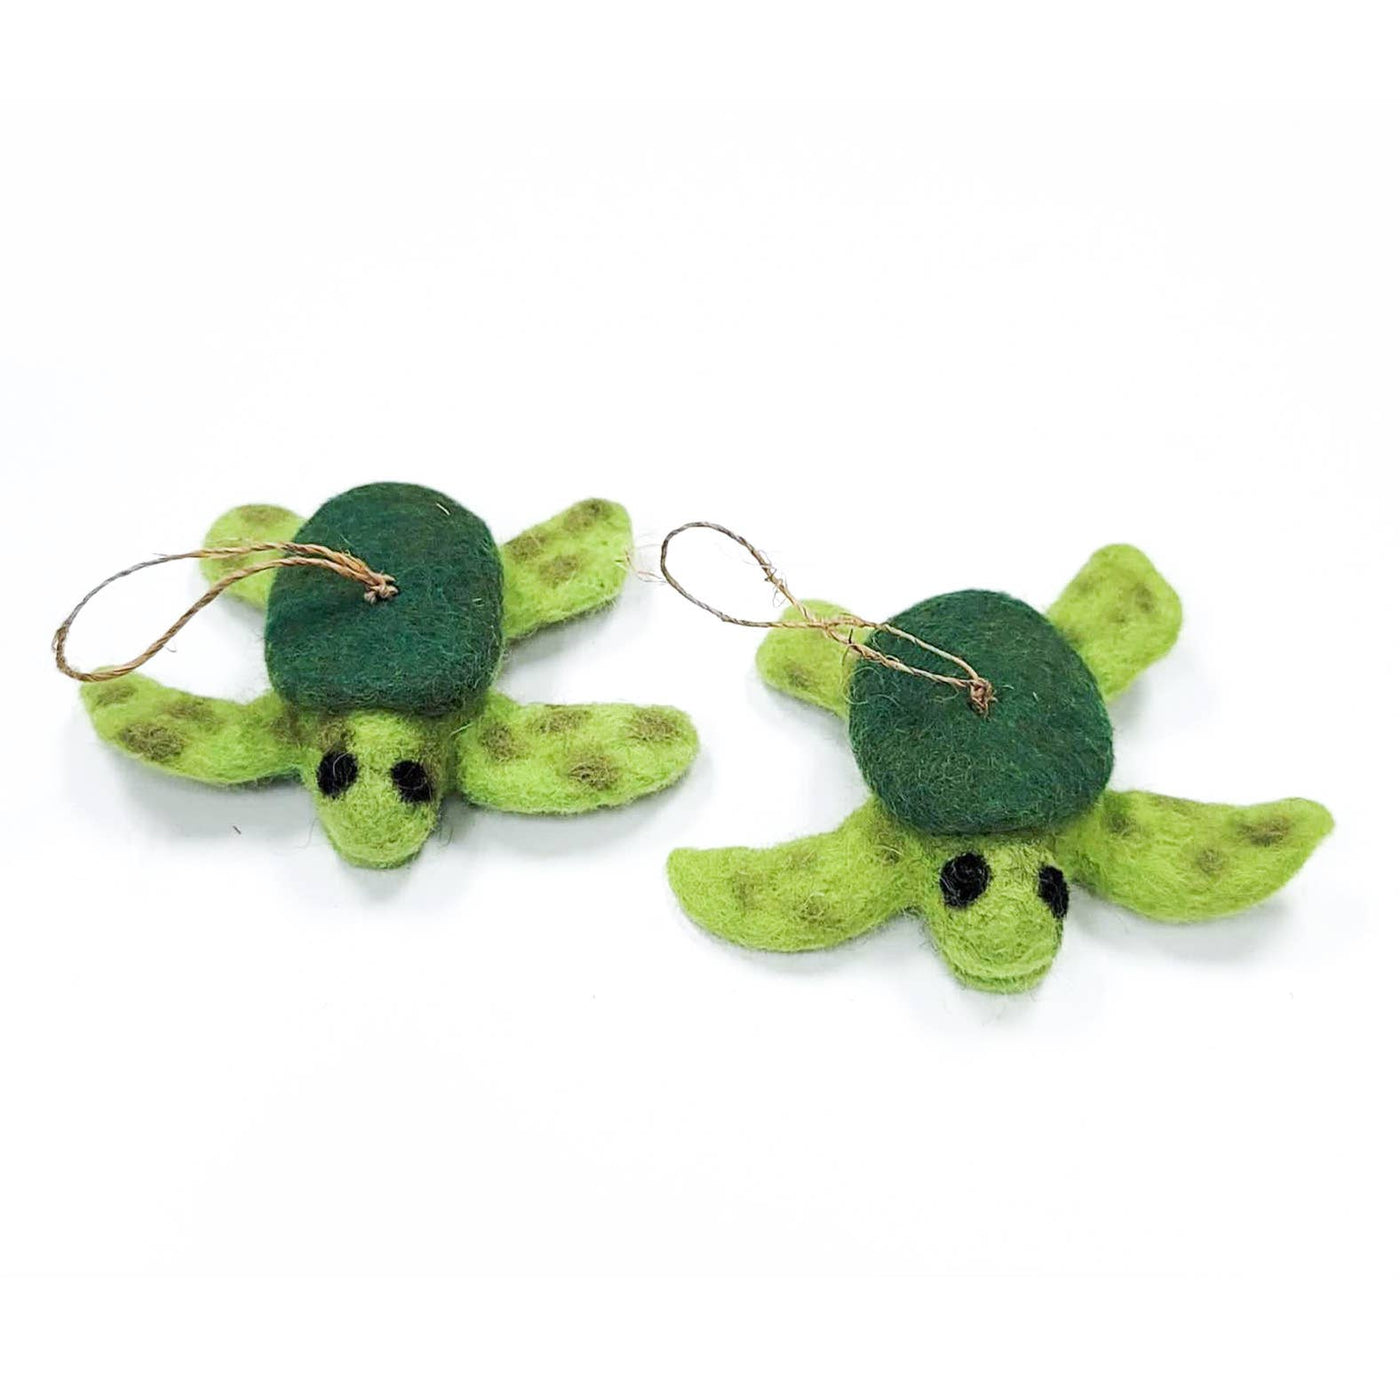 Tiny Turtles Eco Ornaments/Fresheners - Set of 2